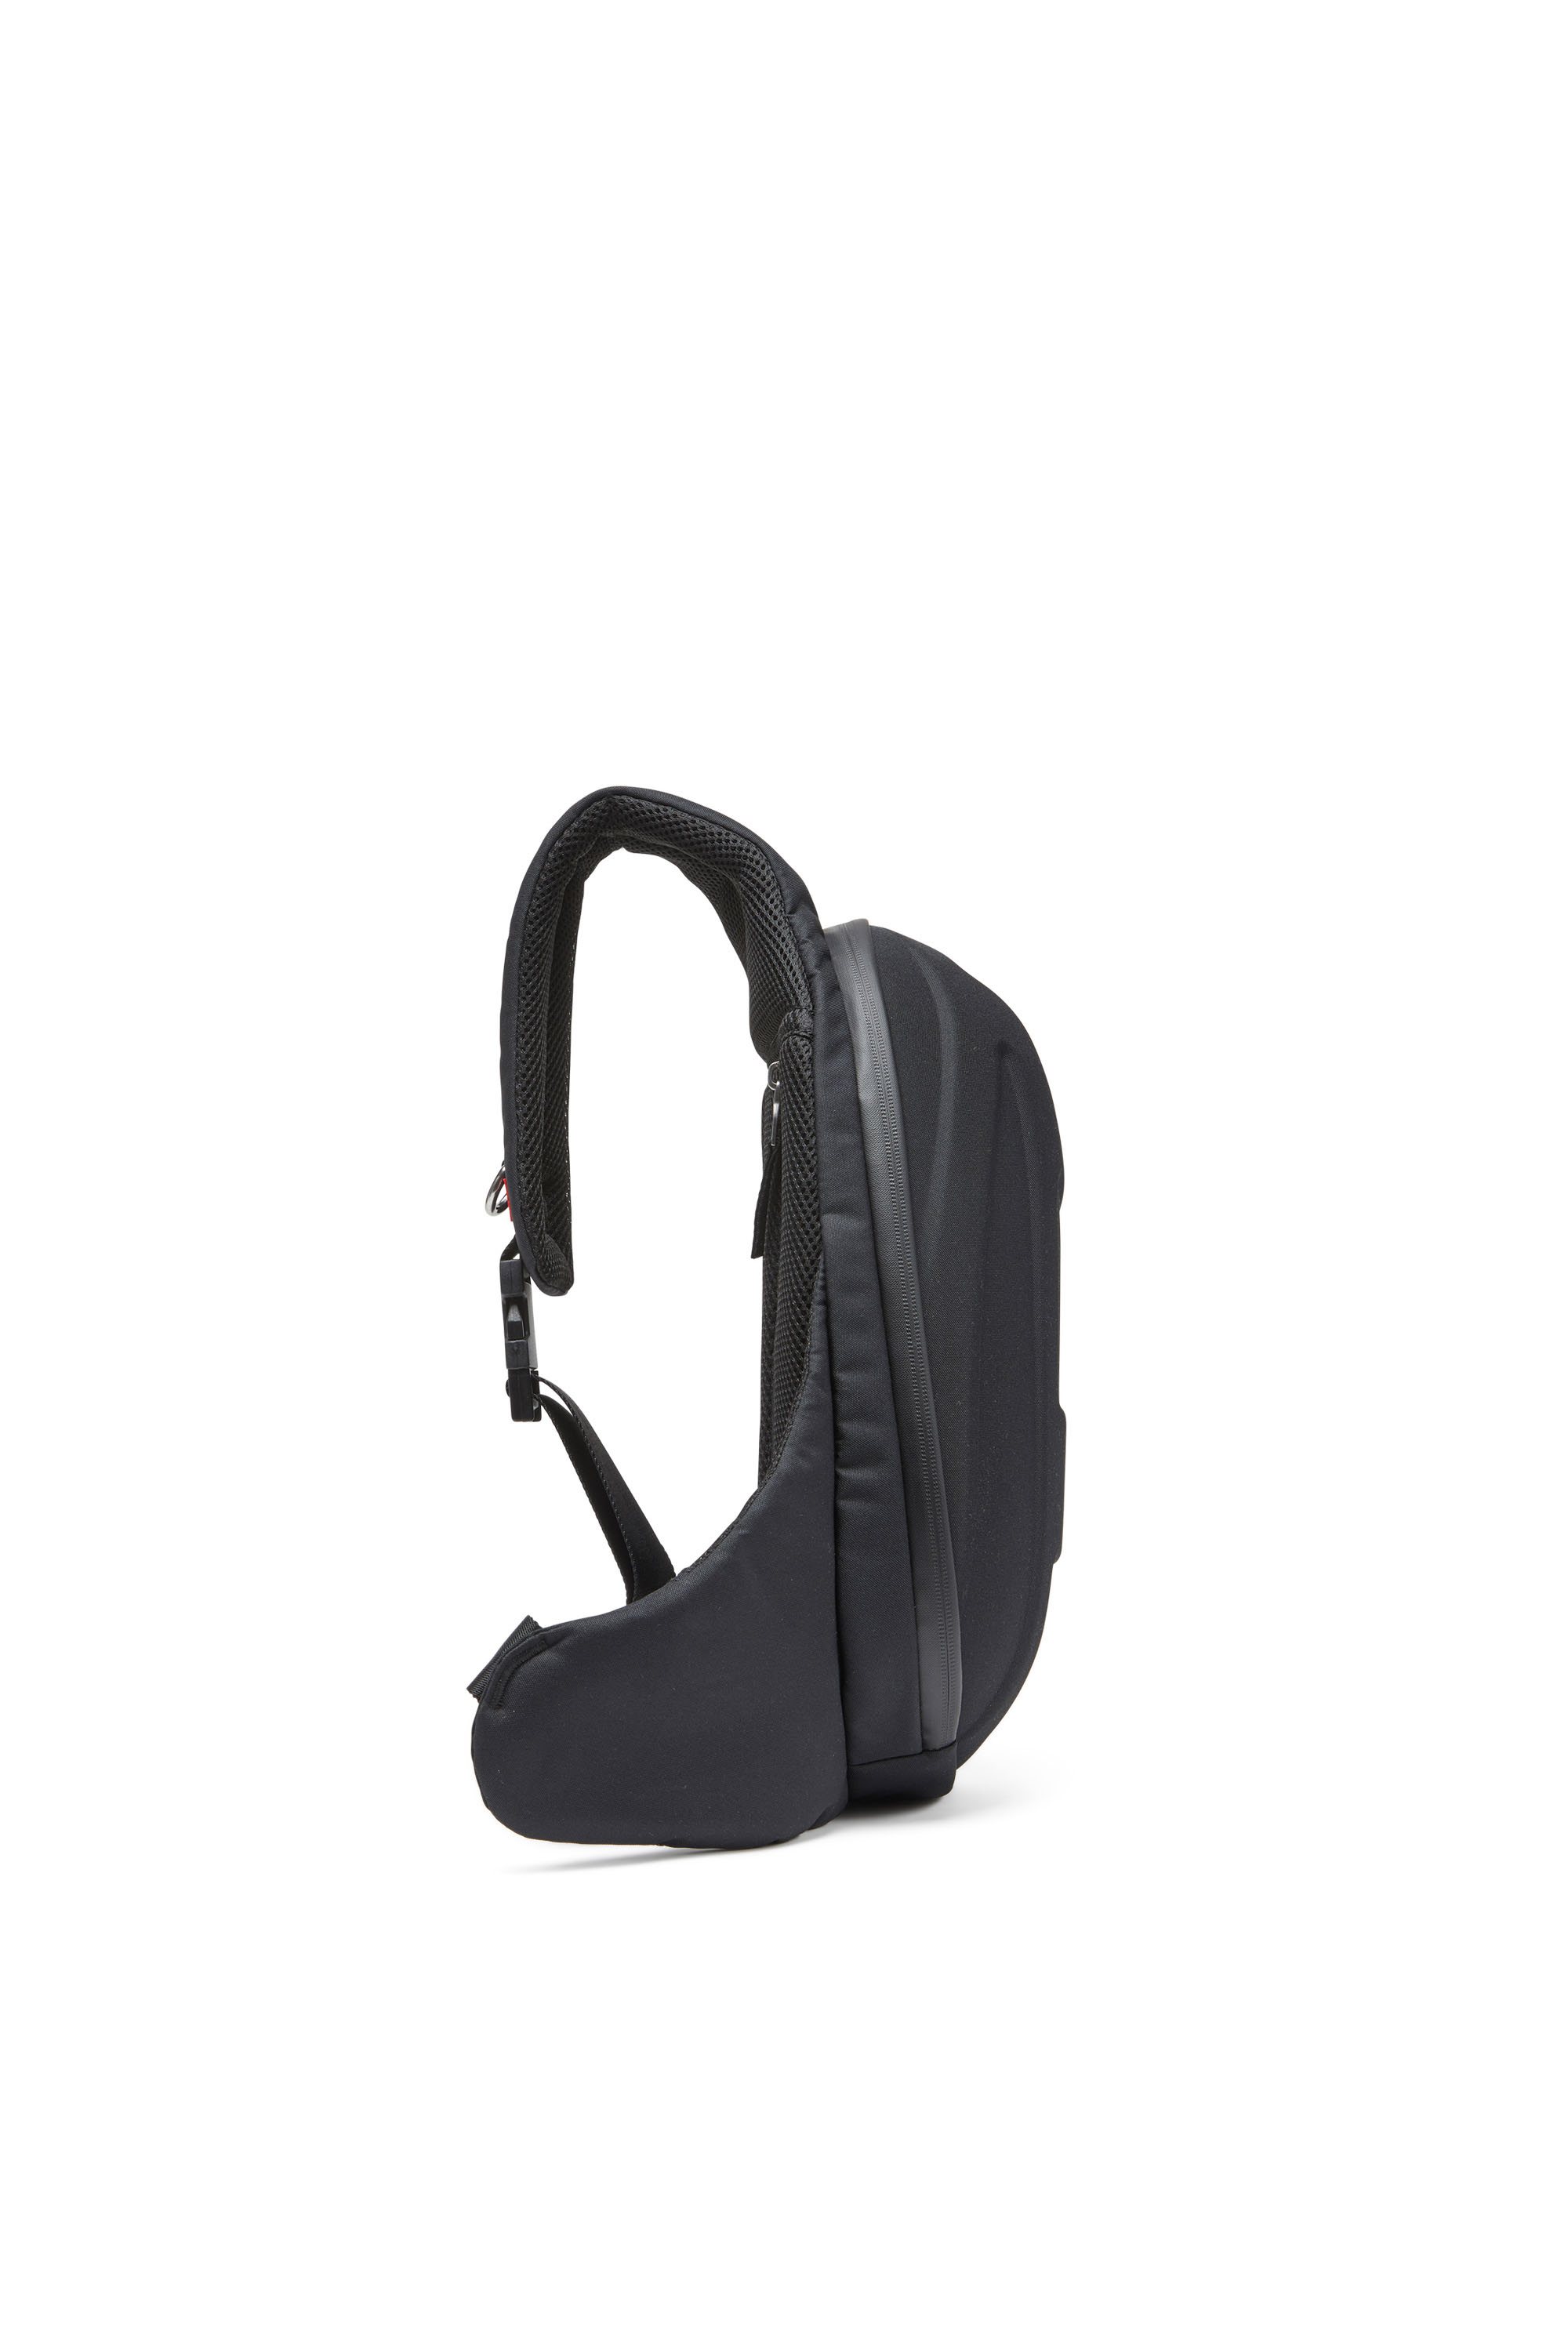 Diesel - 1DR-POD SLING BAG, Male 1DR-Pod-Hard shell sling bag in ブラック - Image 3